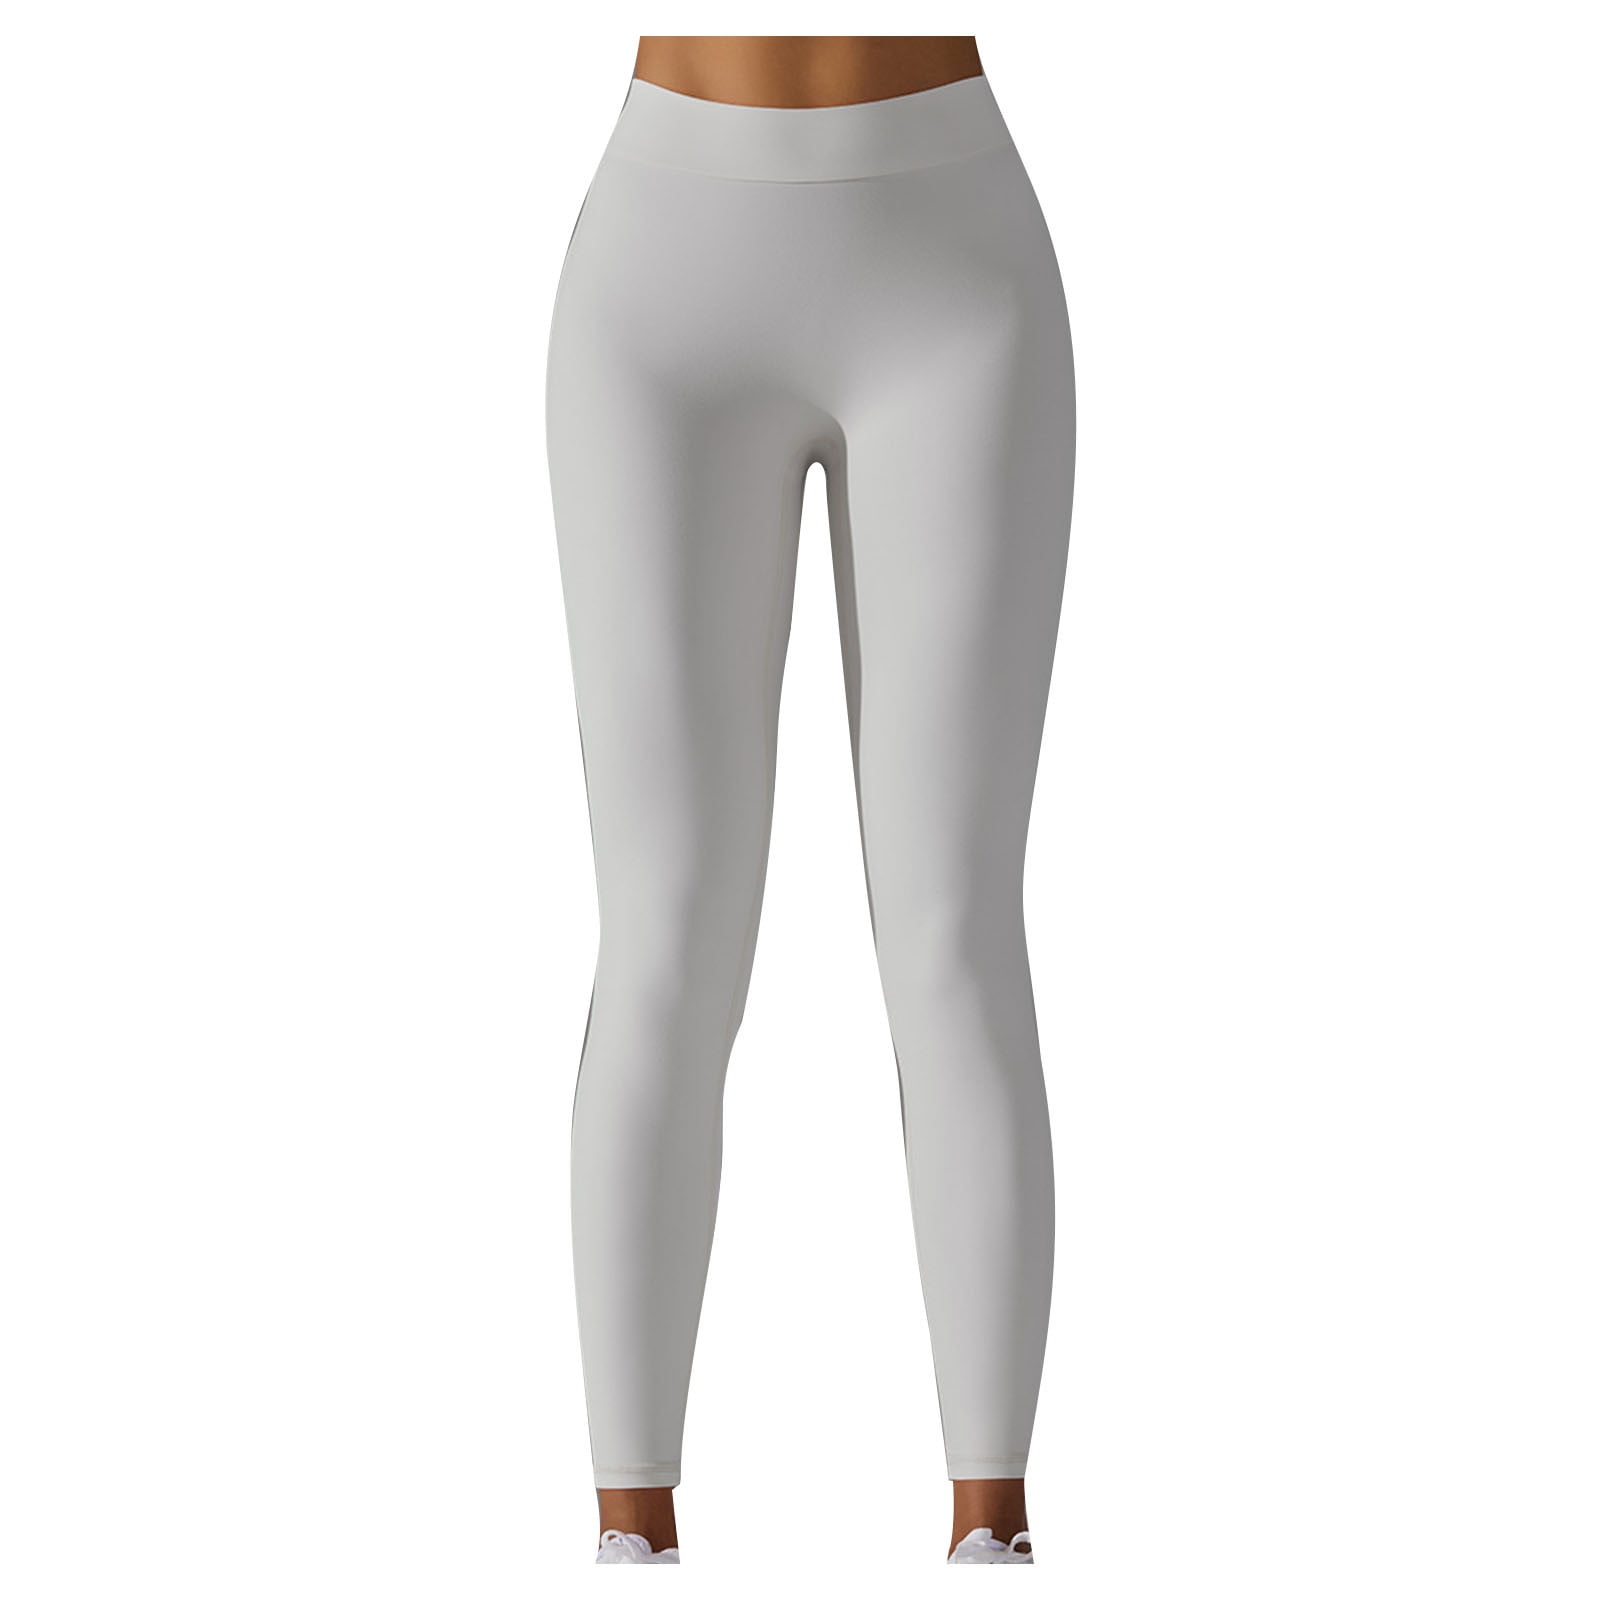 RYRJJ Women's Leggings High Waisted Yoga Pants Seamless Butt Lifting  Compression Activewear Workout Gym Legging Pant(White,XL)